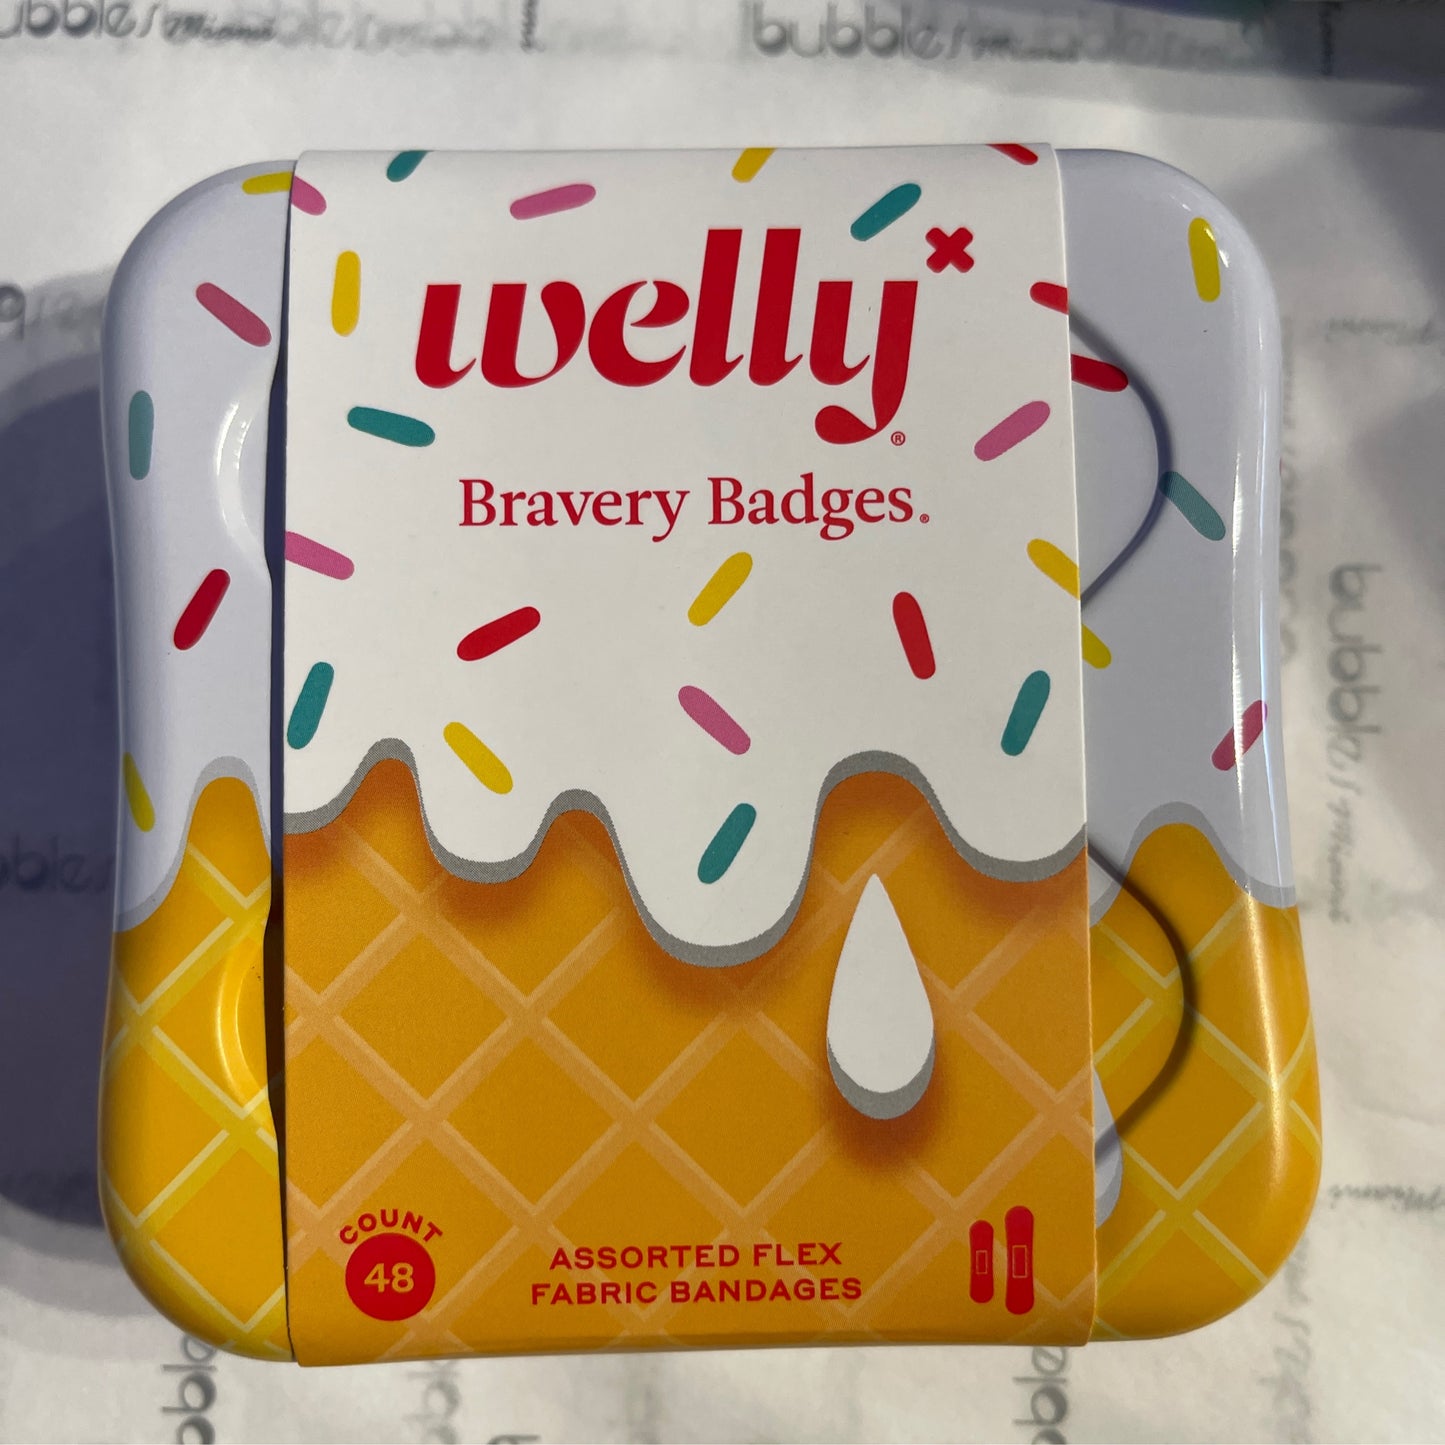 WELLY Bravery Badges flex bandages